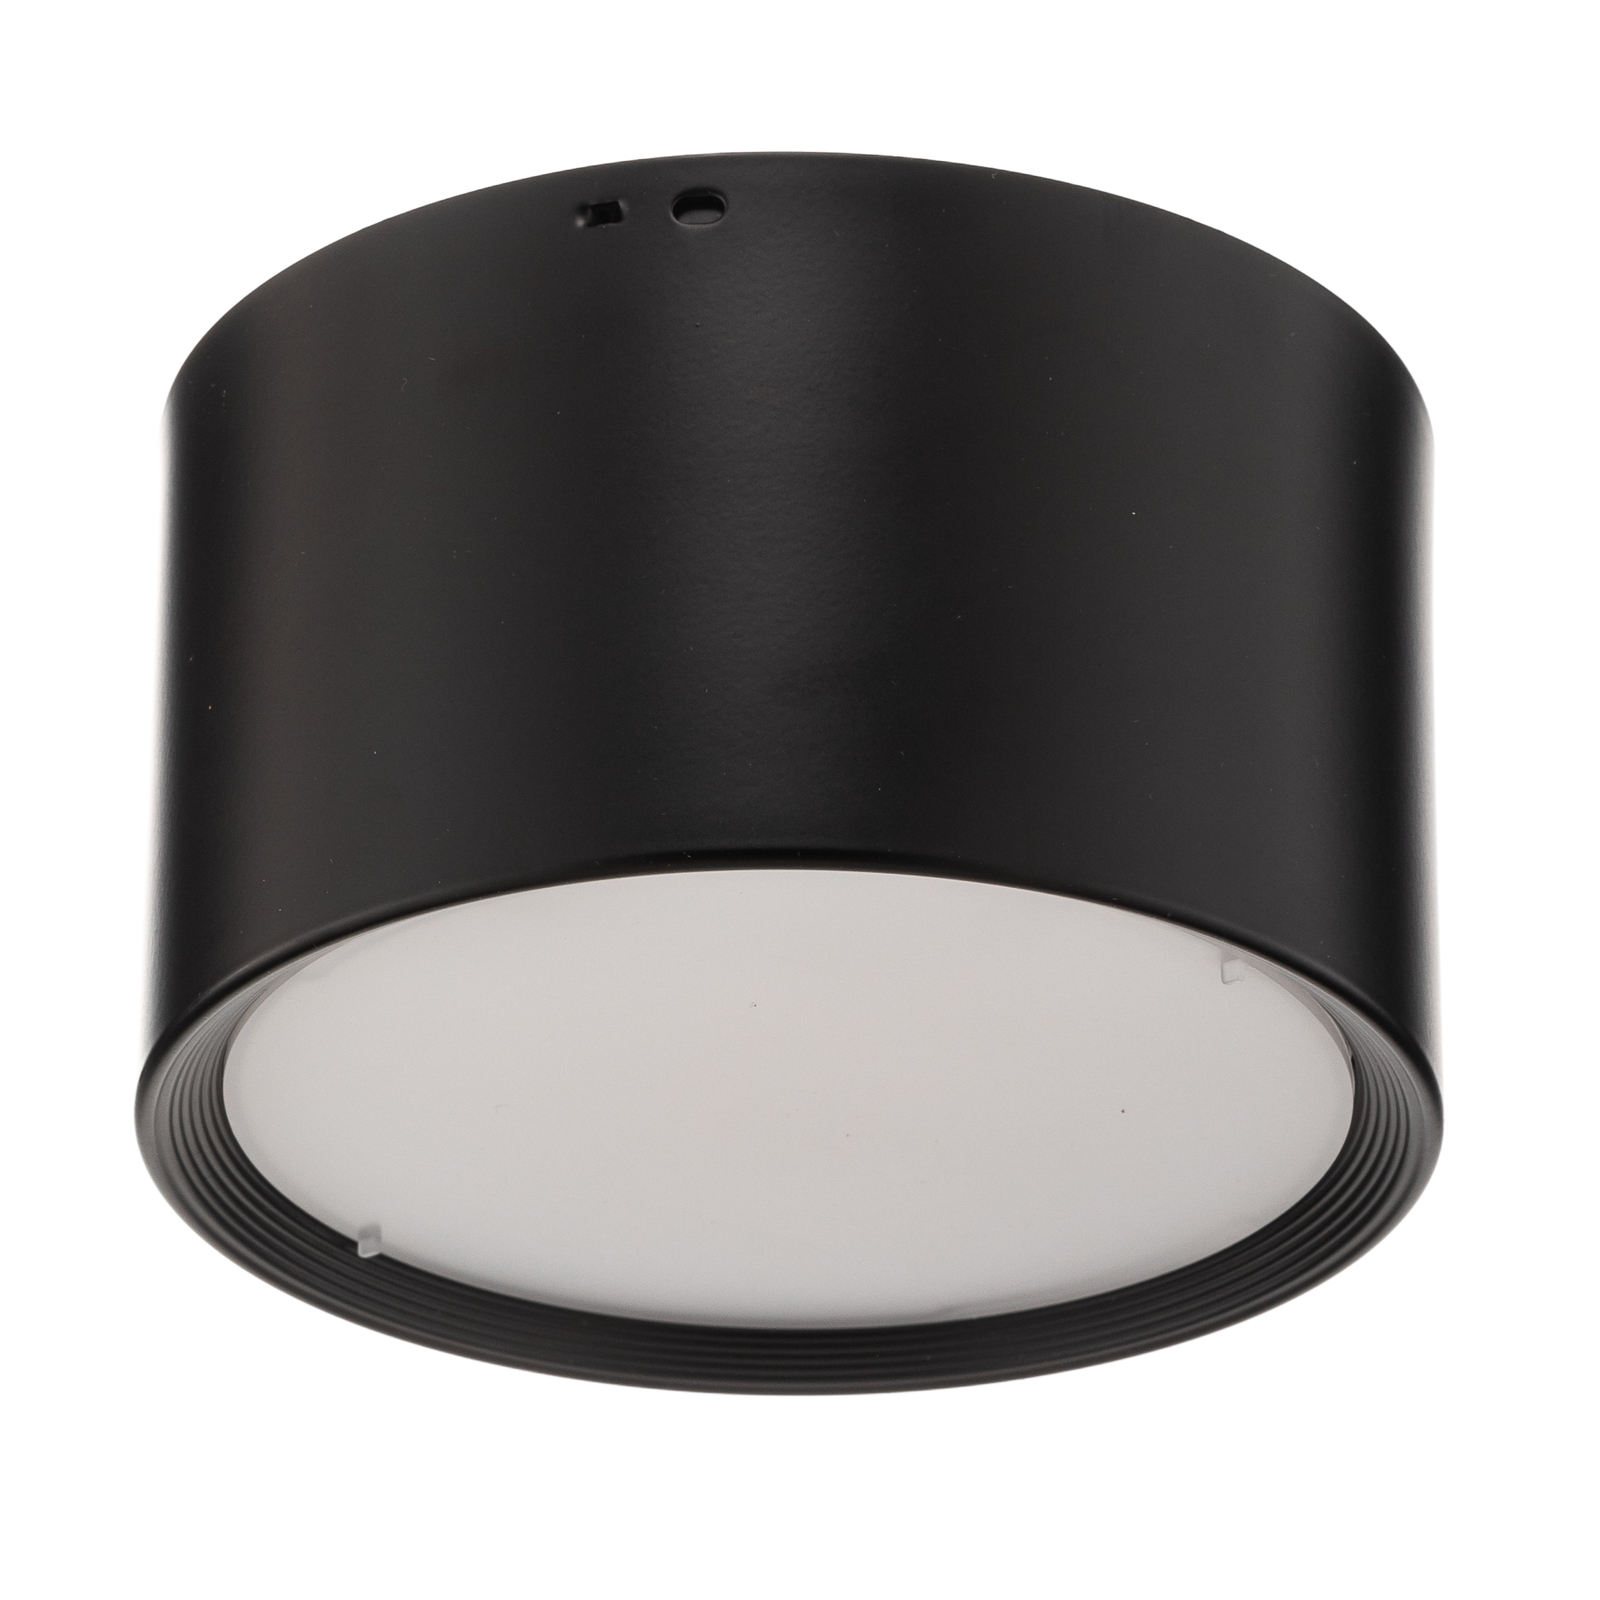 LED downlight Ita en noir avec diffuseur, Ø 15 cm